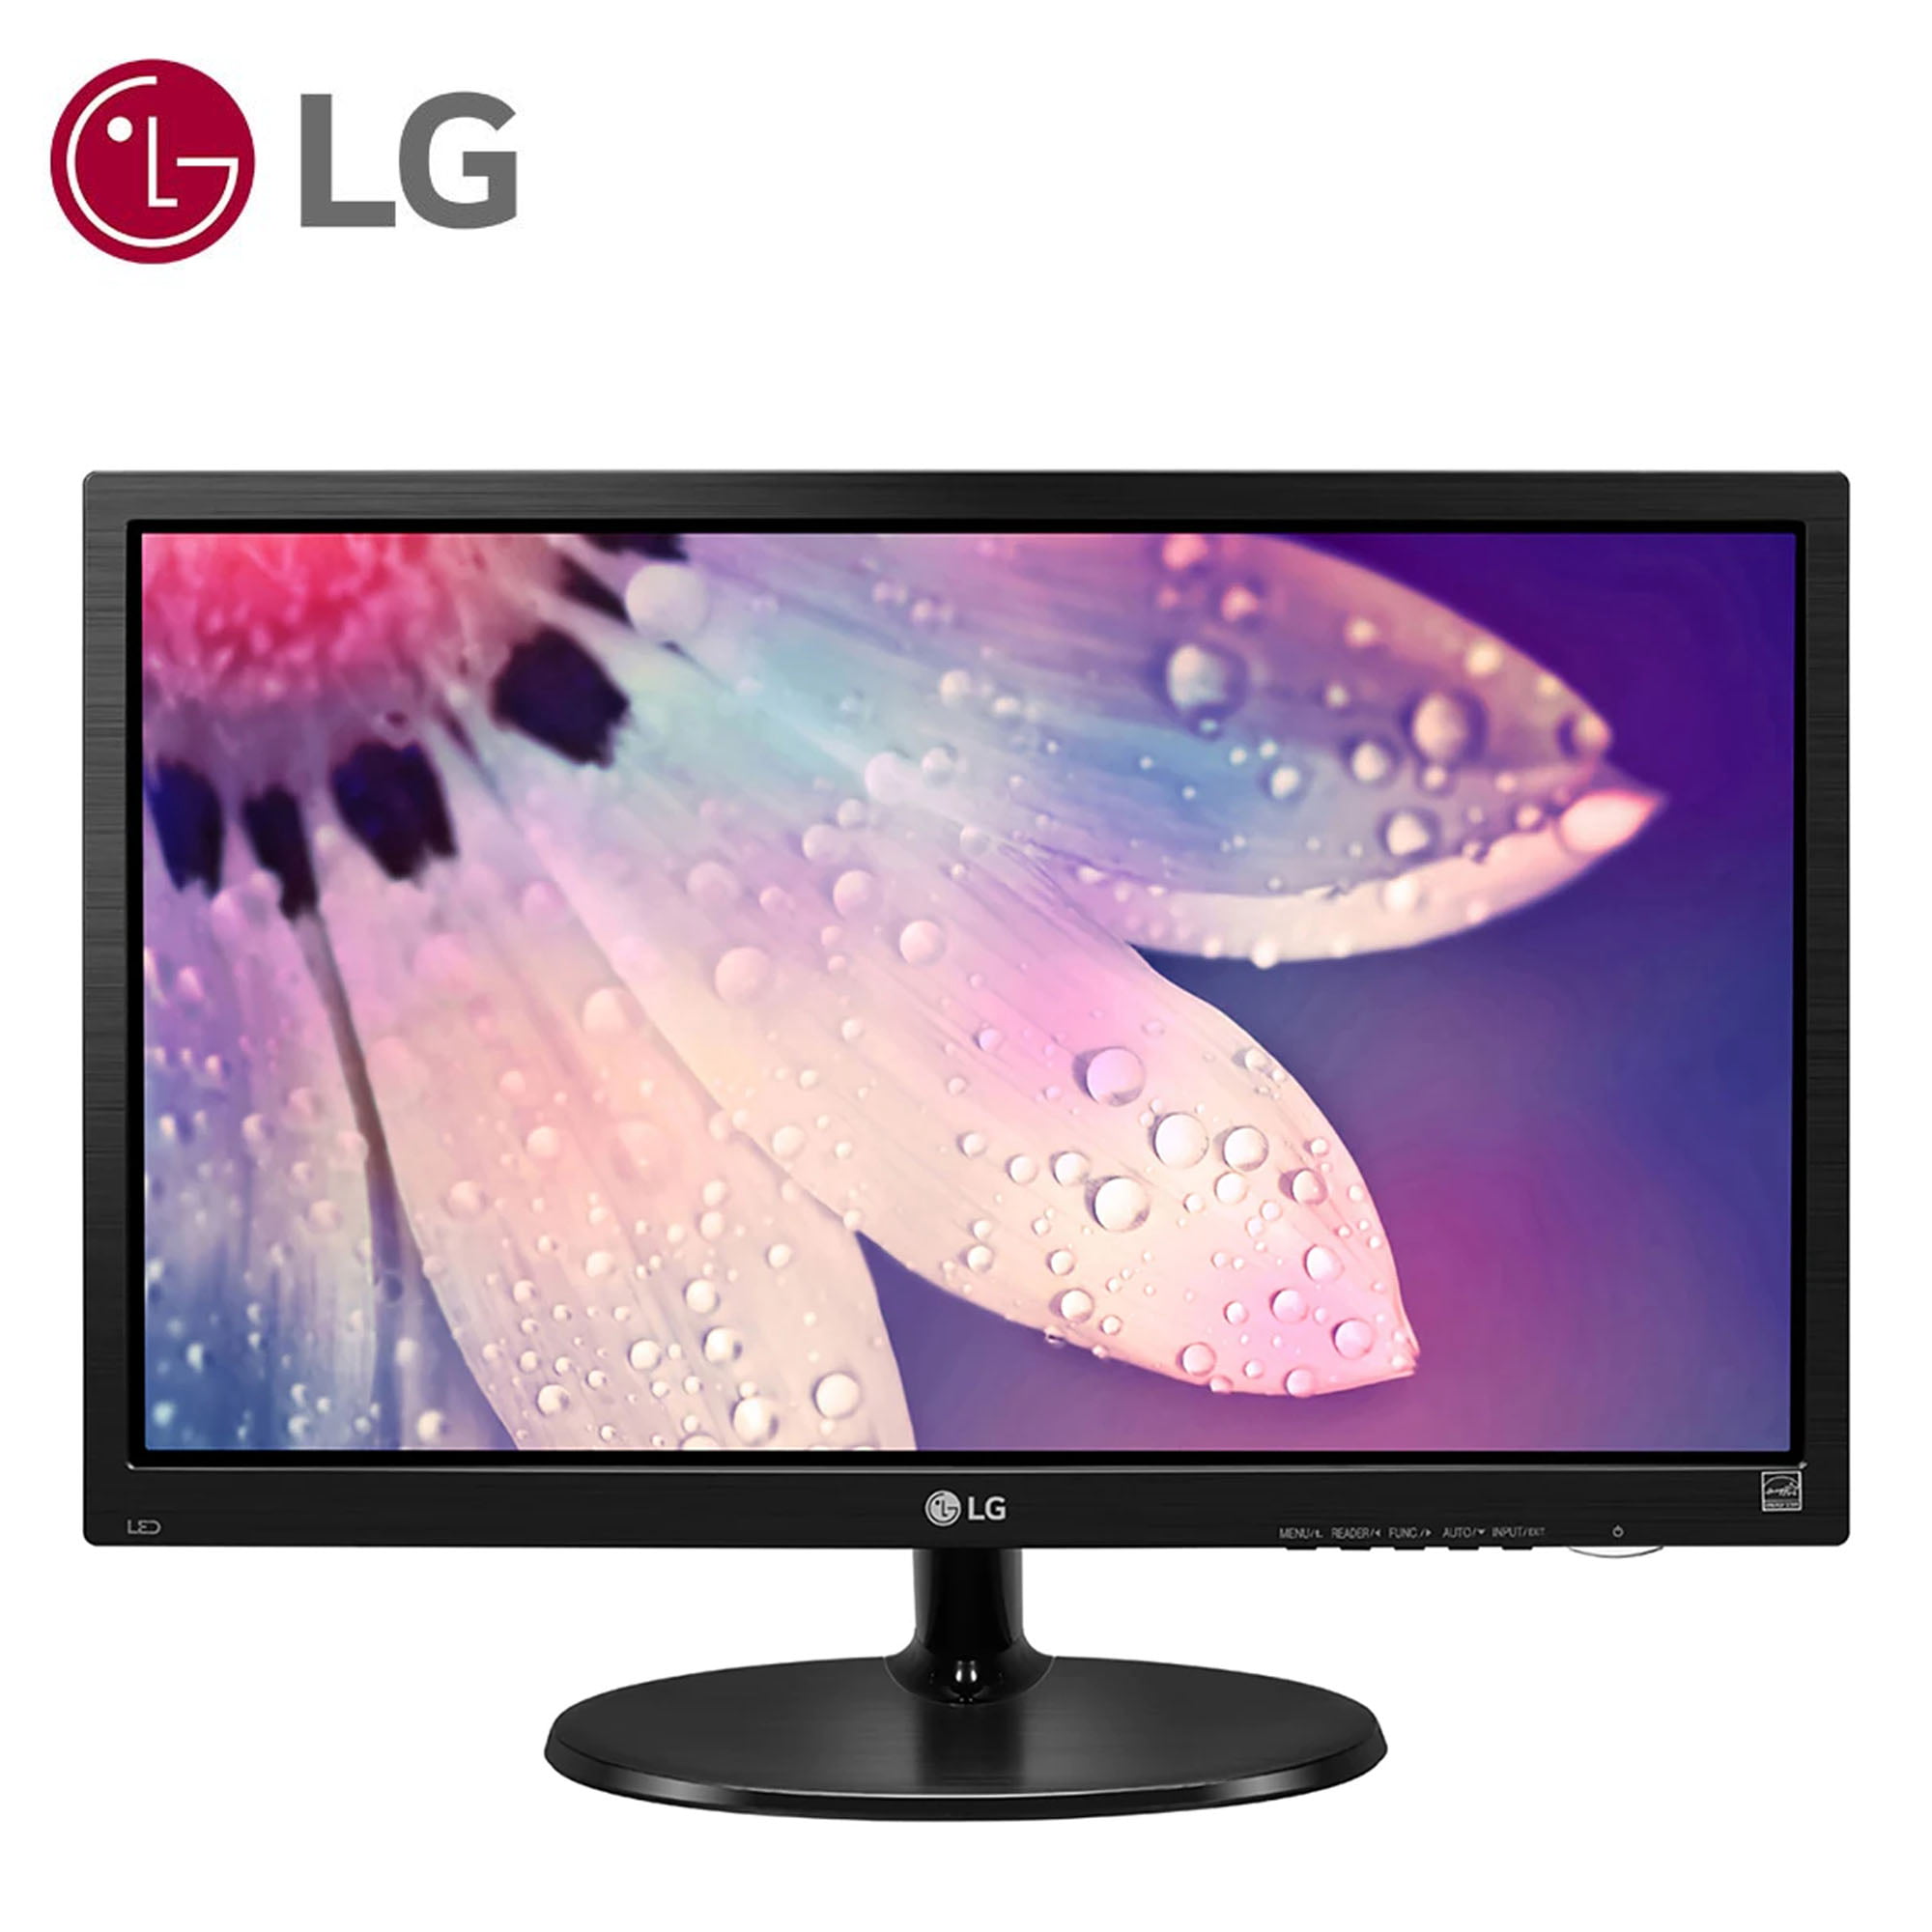 Monitor LED DELL E2223Hv de 21.5, Resolución 1920 x 1080 (Full HD 1080p),  8 ms. Color Negro.